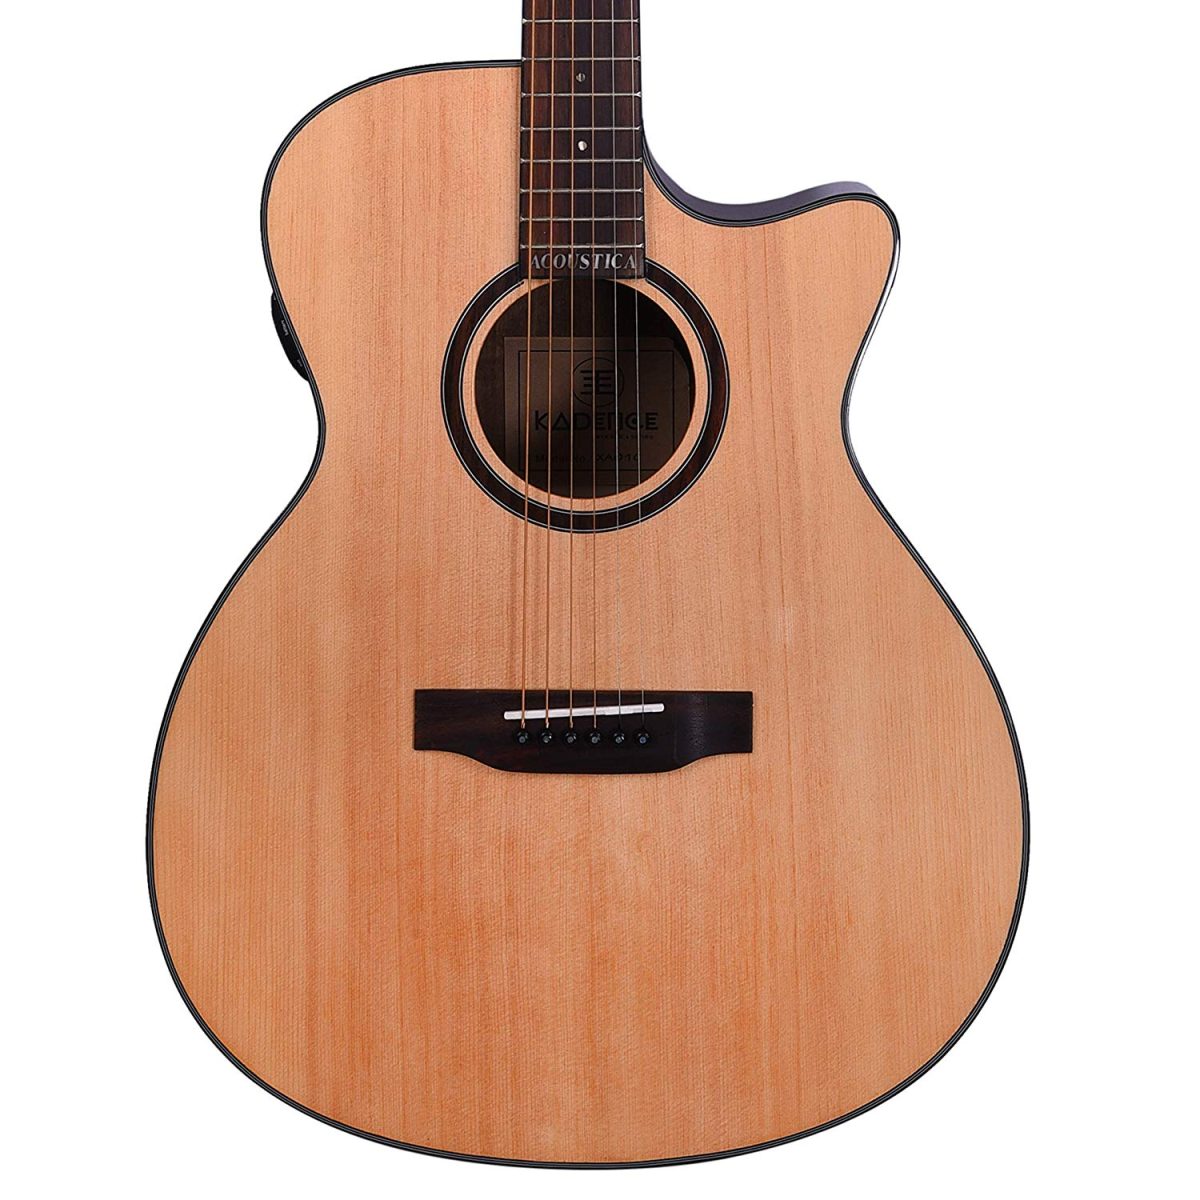 Kadence Premium Trance Semi-Acoustic Guitar XA01C